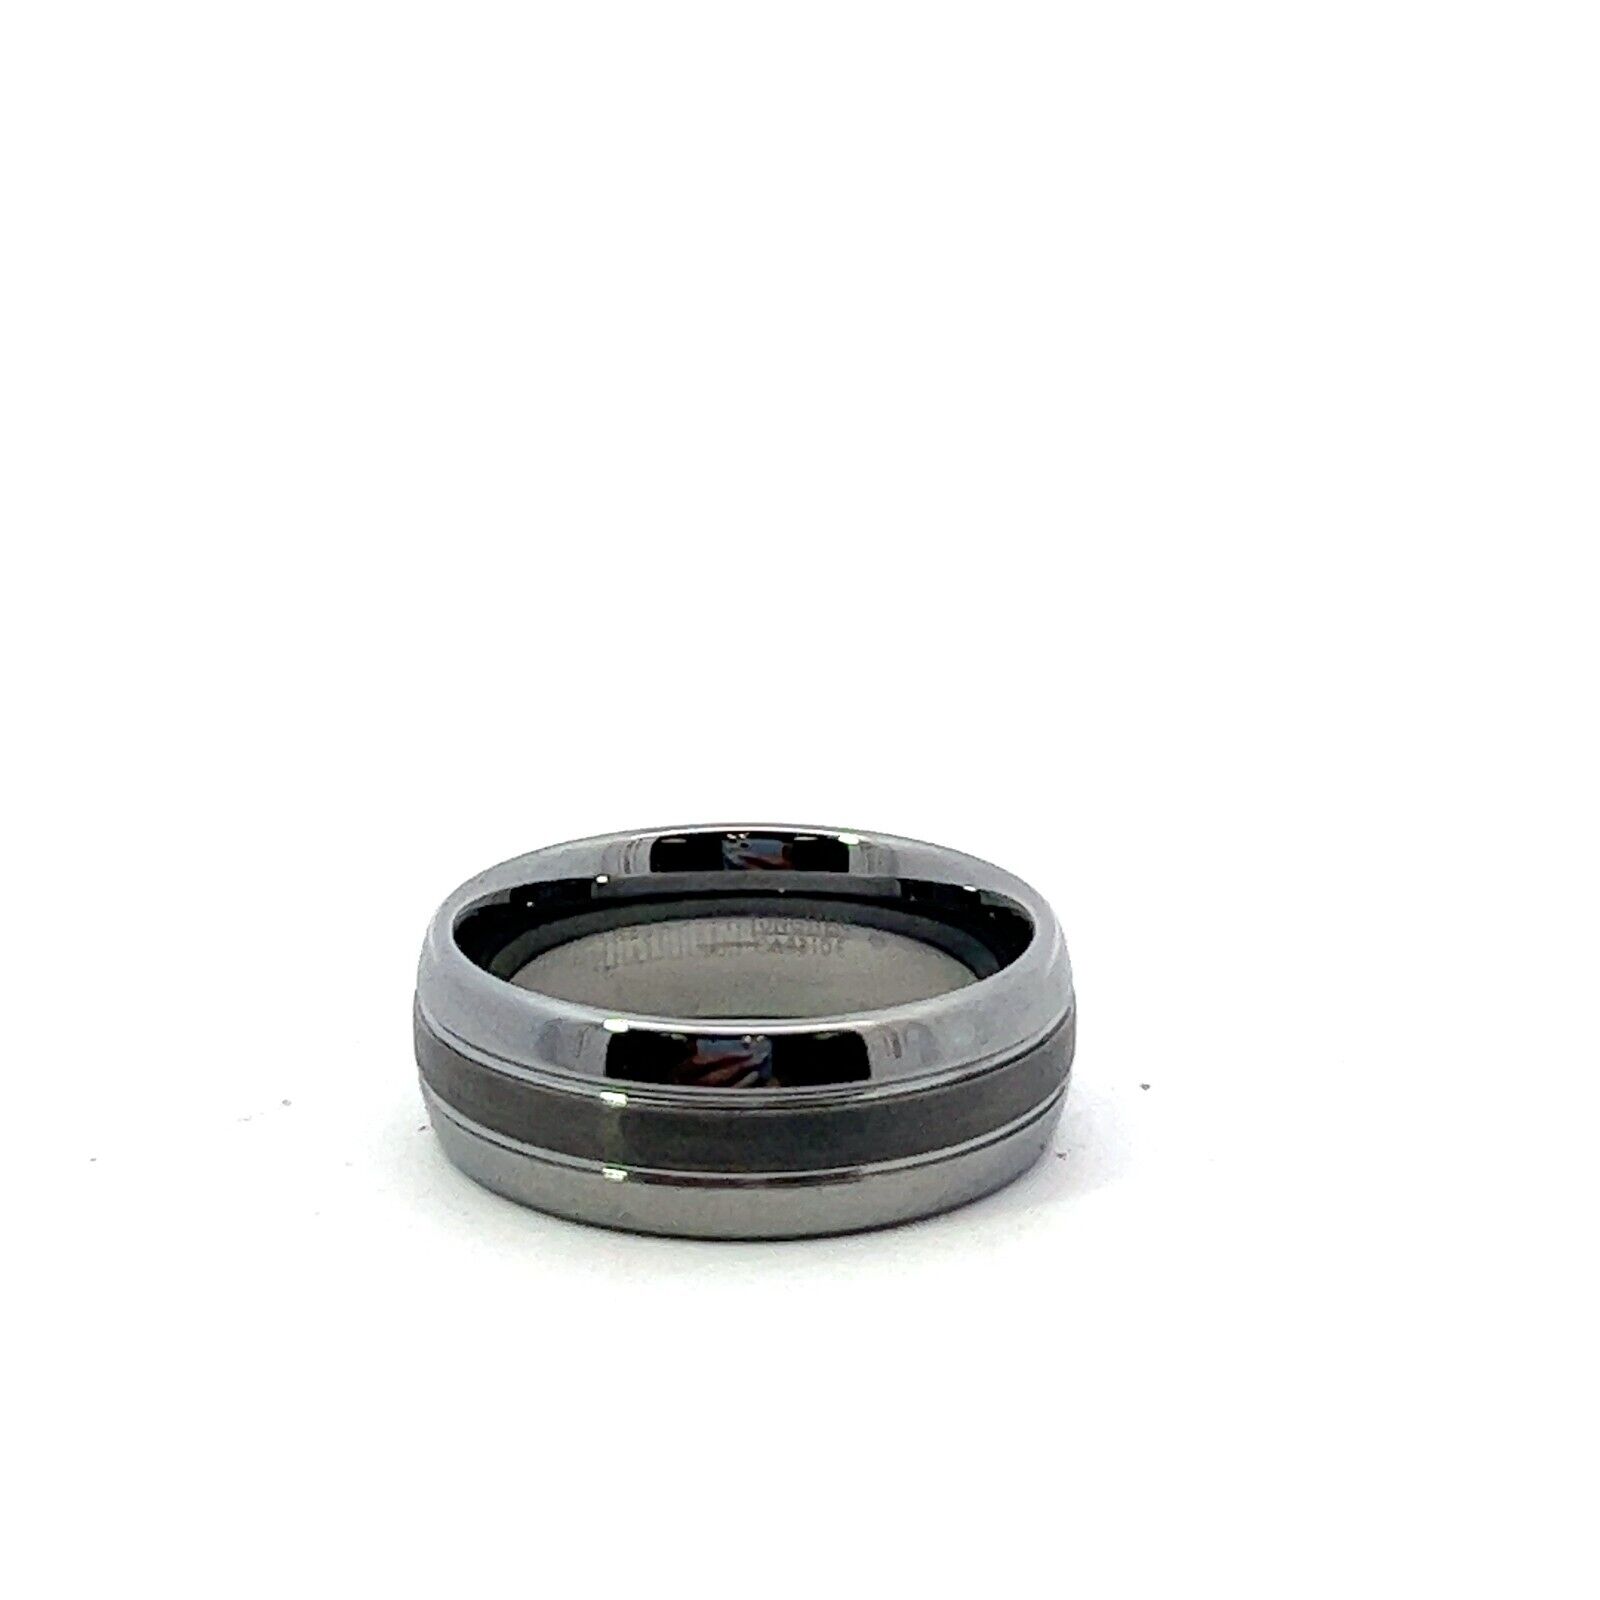 Triton Tungsten Carbide Double Groove Satin Gray Center 8mm Band Ring